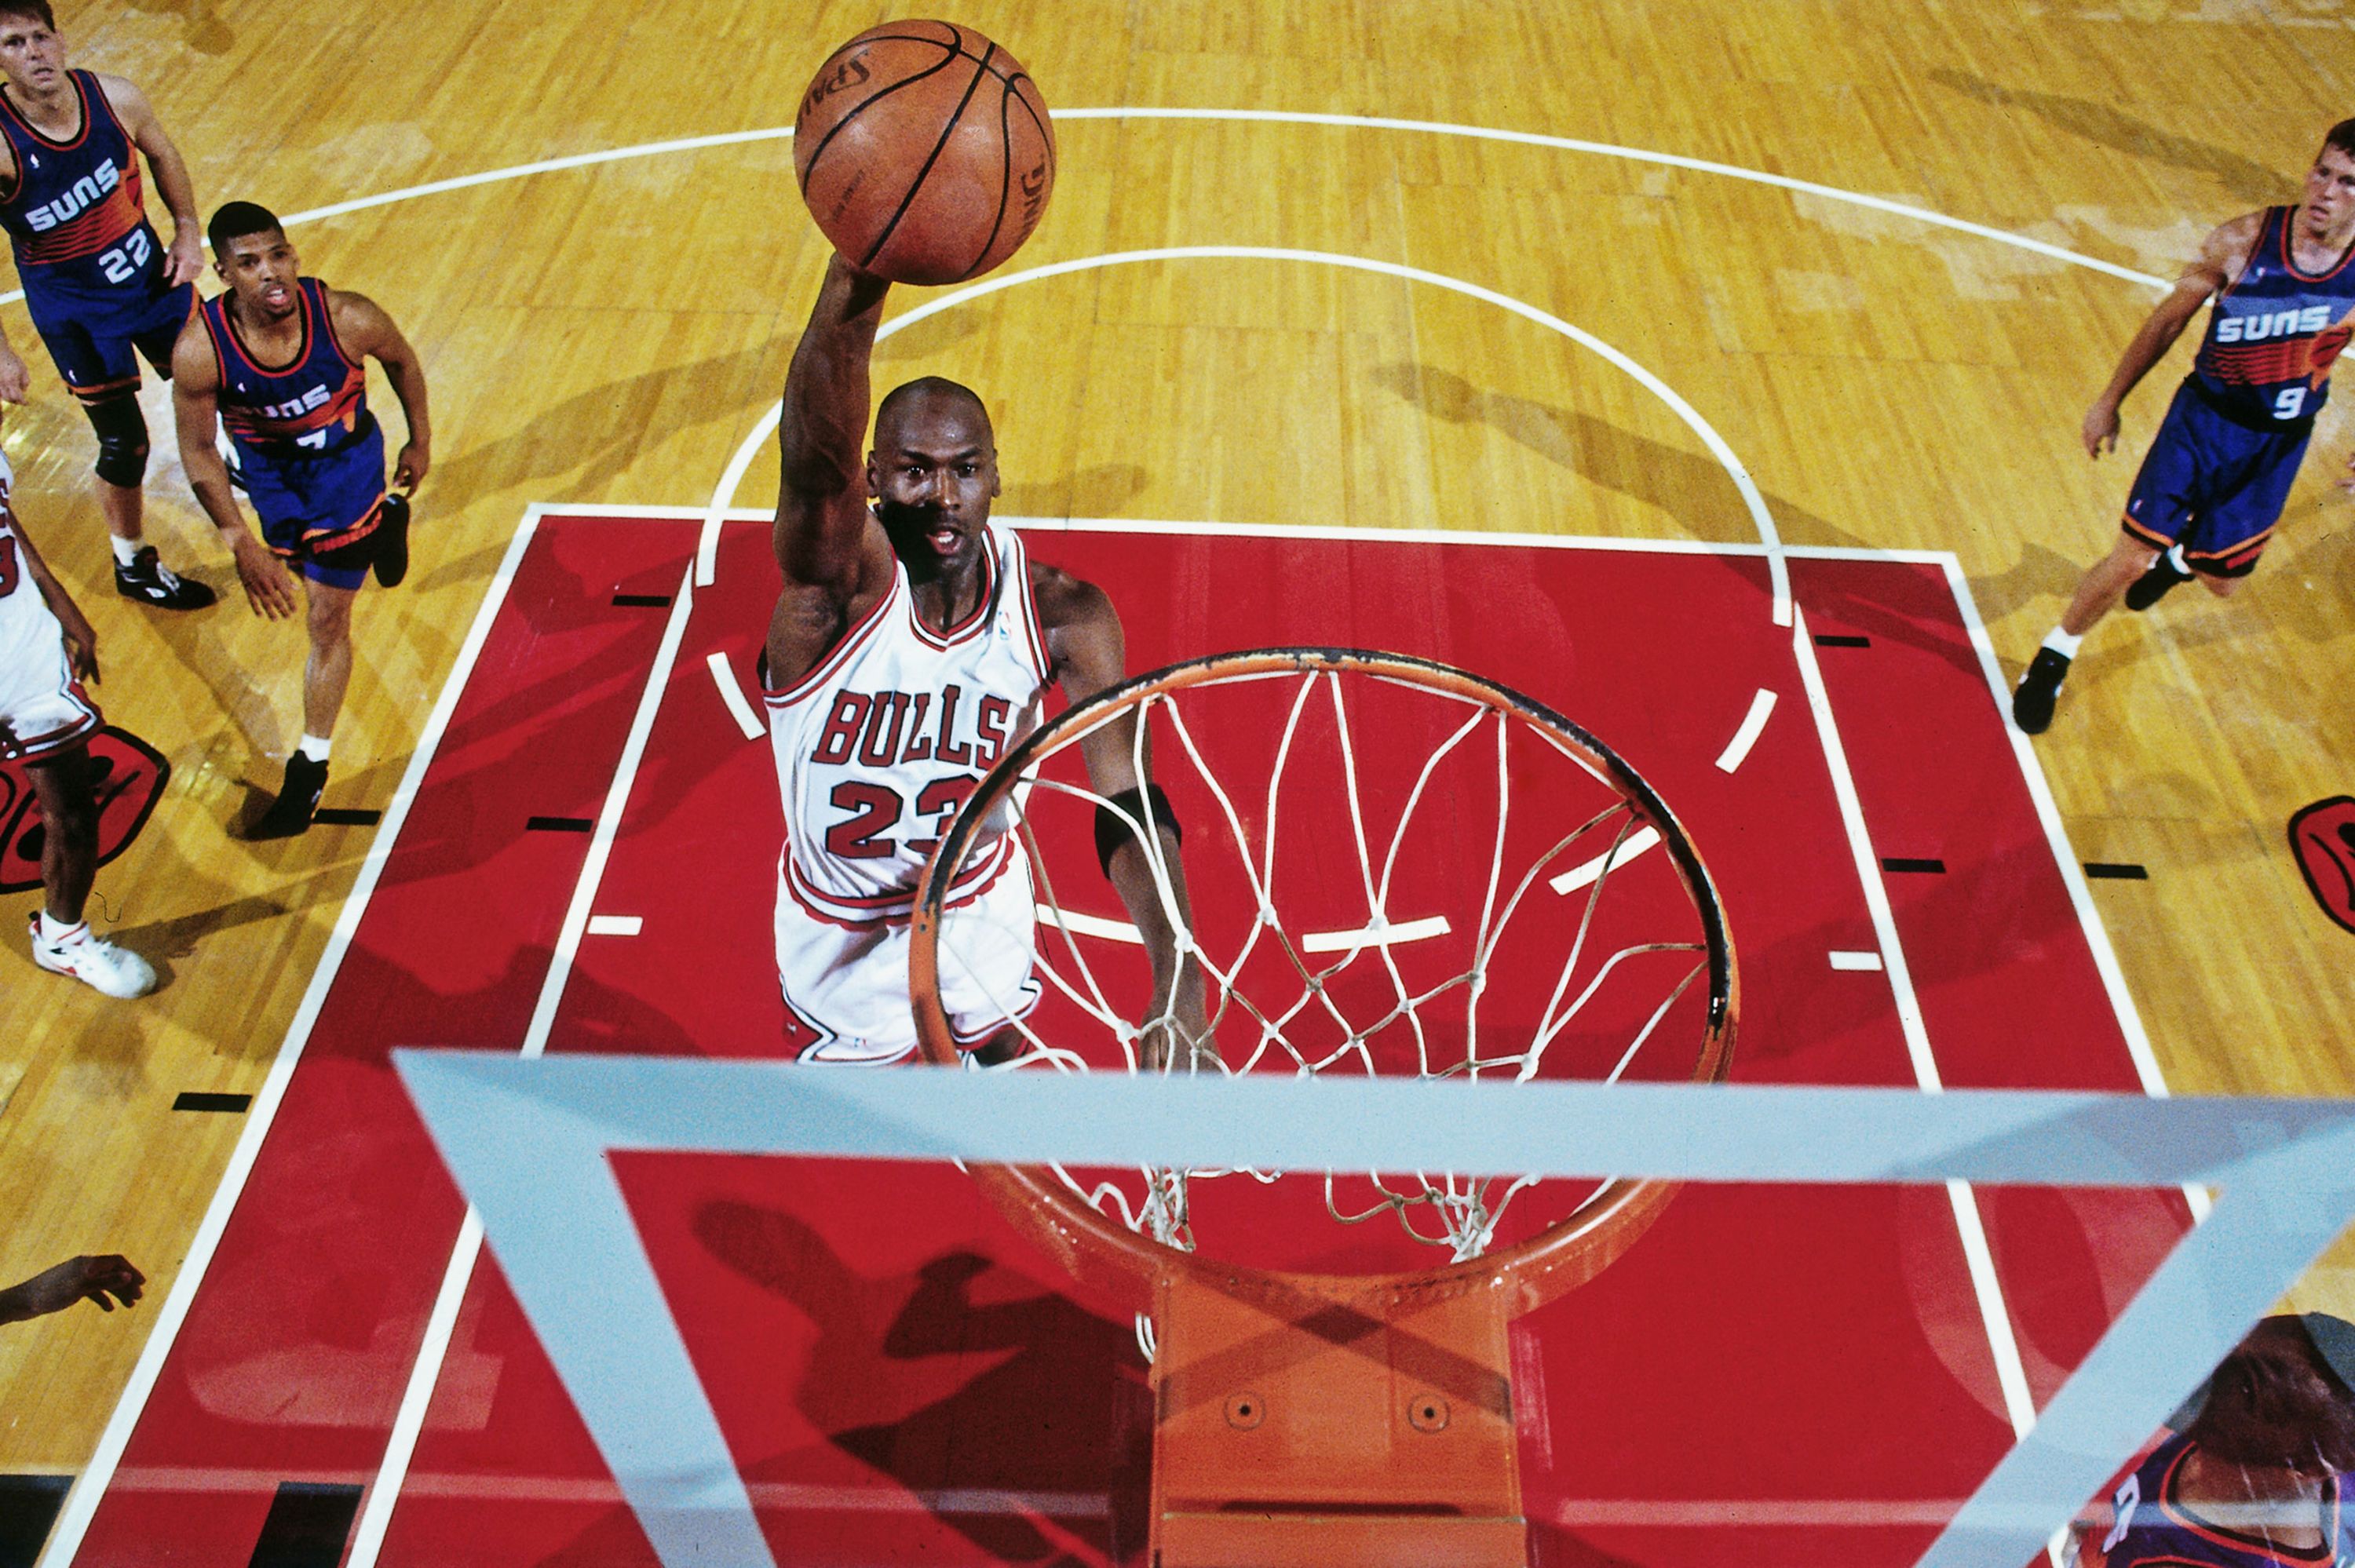 A magical year': Looking back at Michael Jordan's season as a